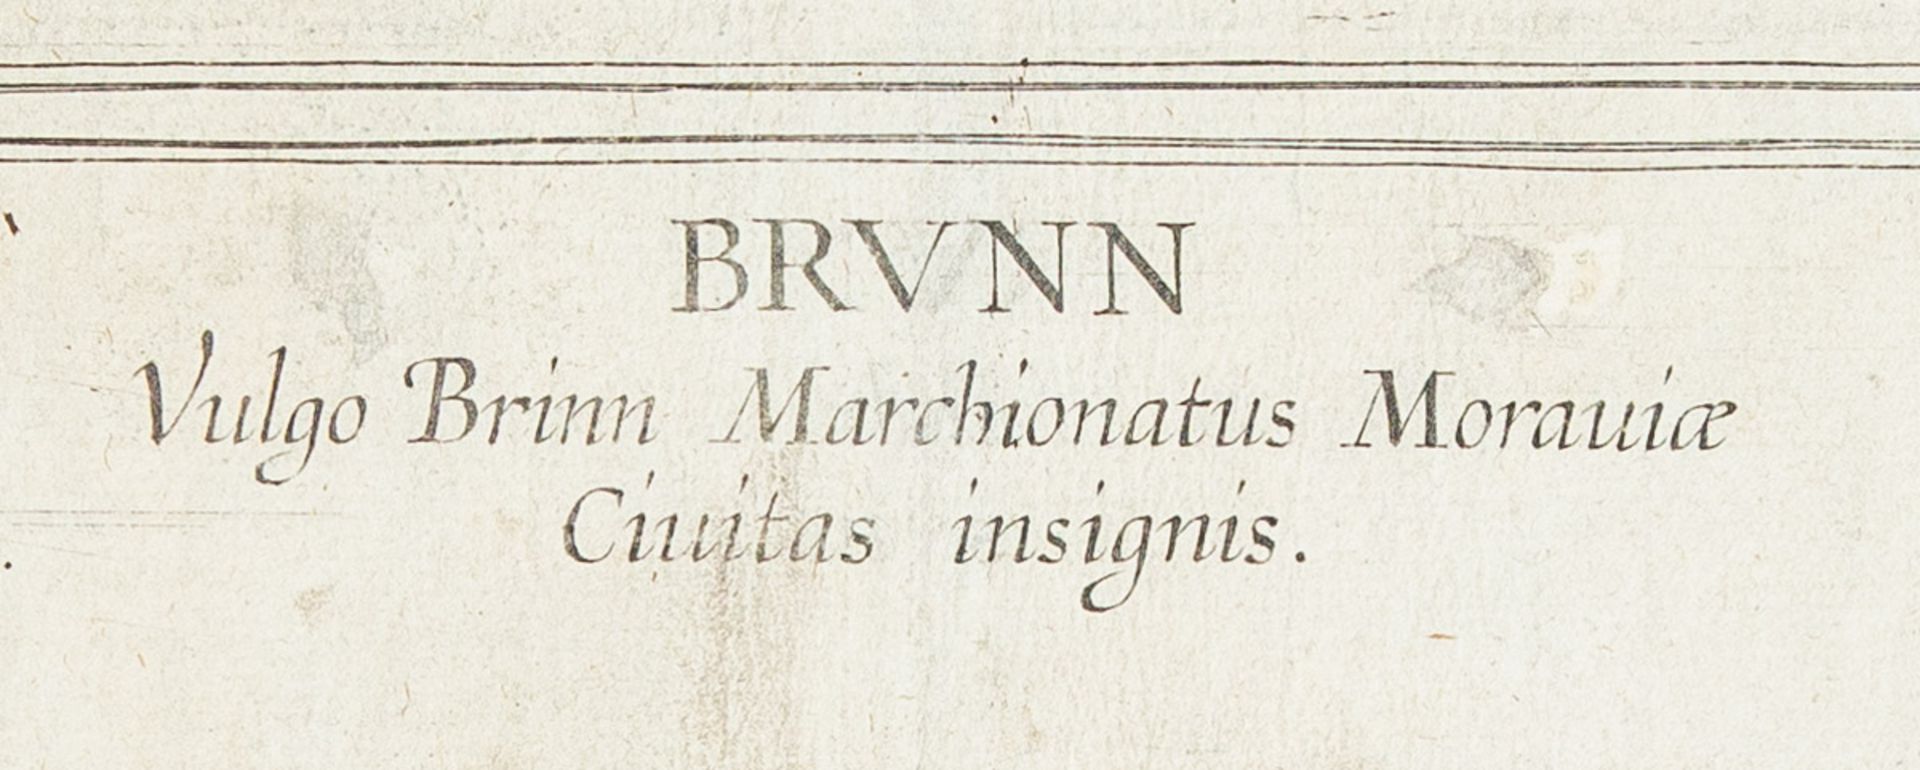 Hoefnagel, Joris (1542 - 1600), Ansicht von Brunn - Image 3 of 3